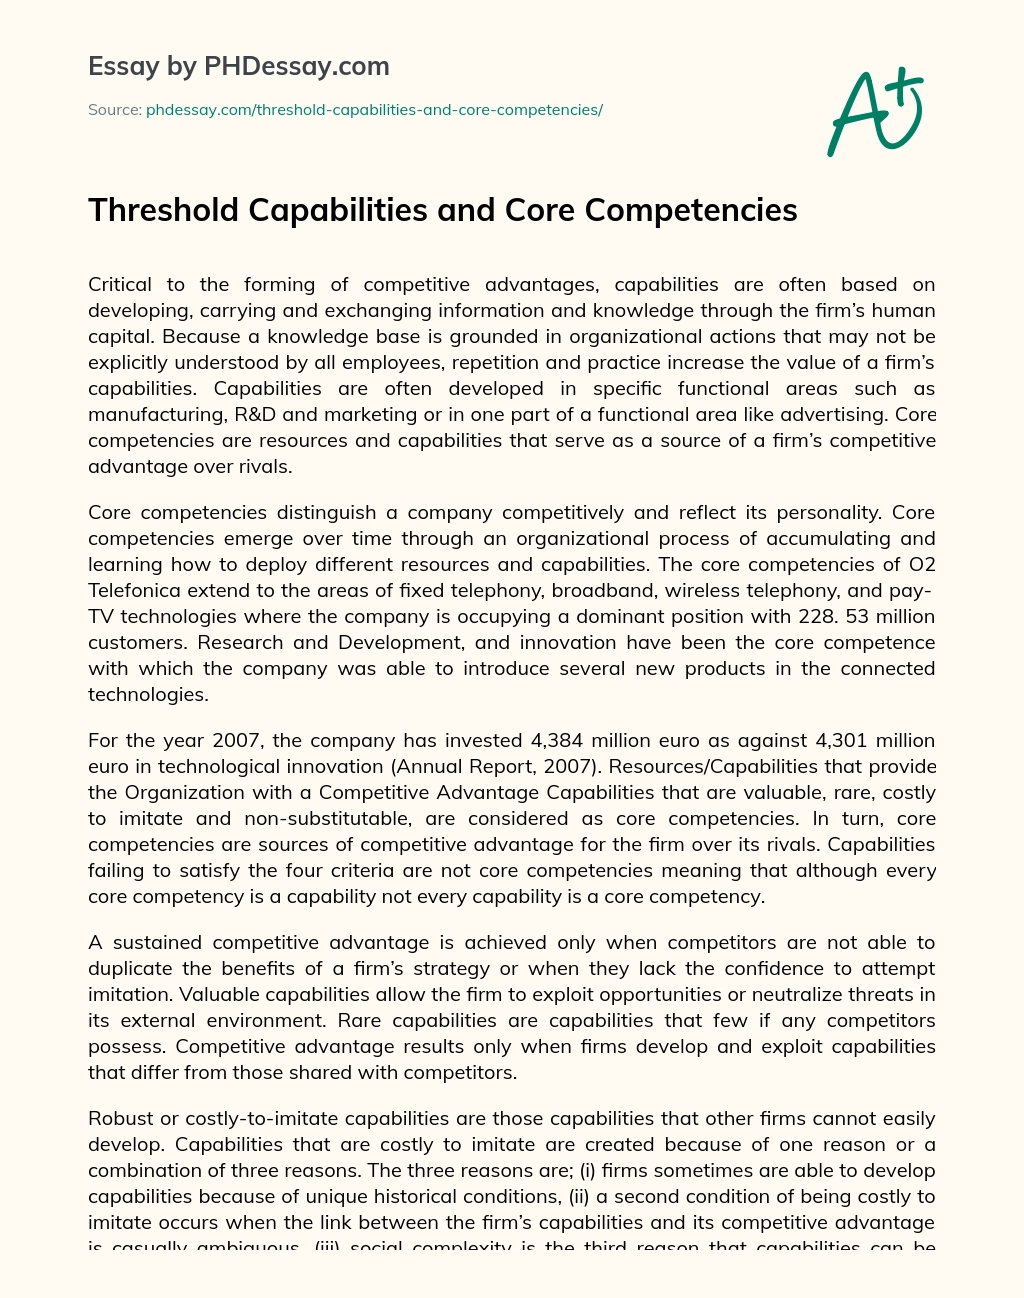 Threshold Capabilities and Core Competencies essay